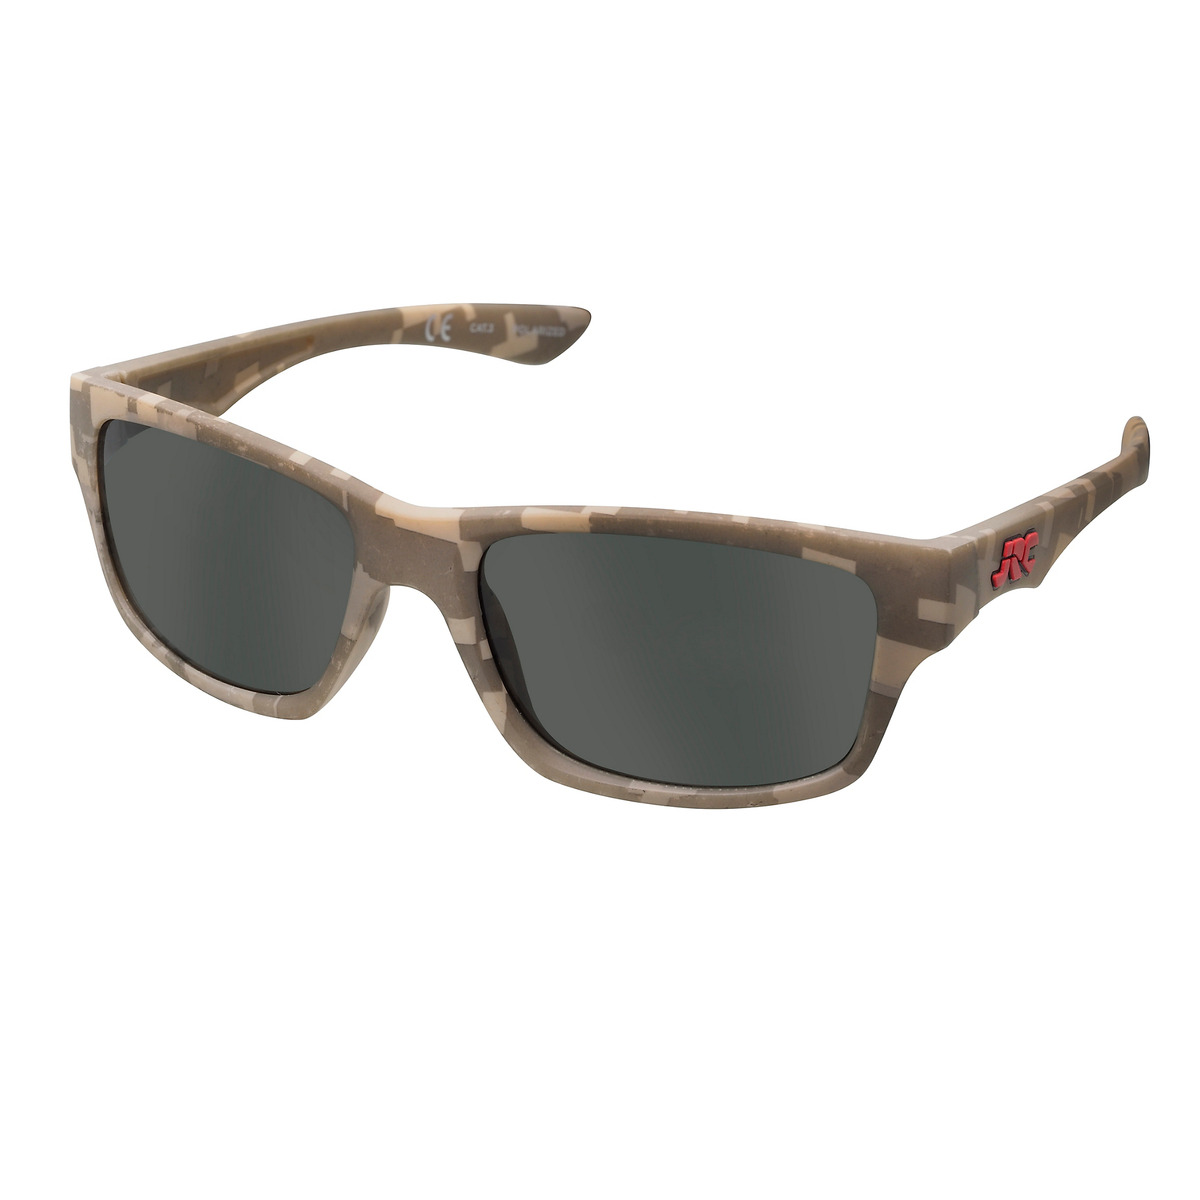 Jrc Stealth Sunglasses - Digi Cam/Smoke